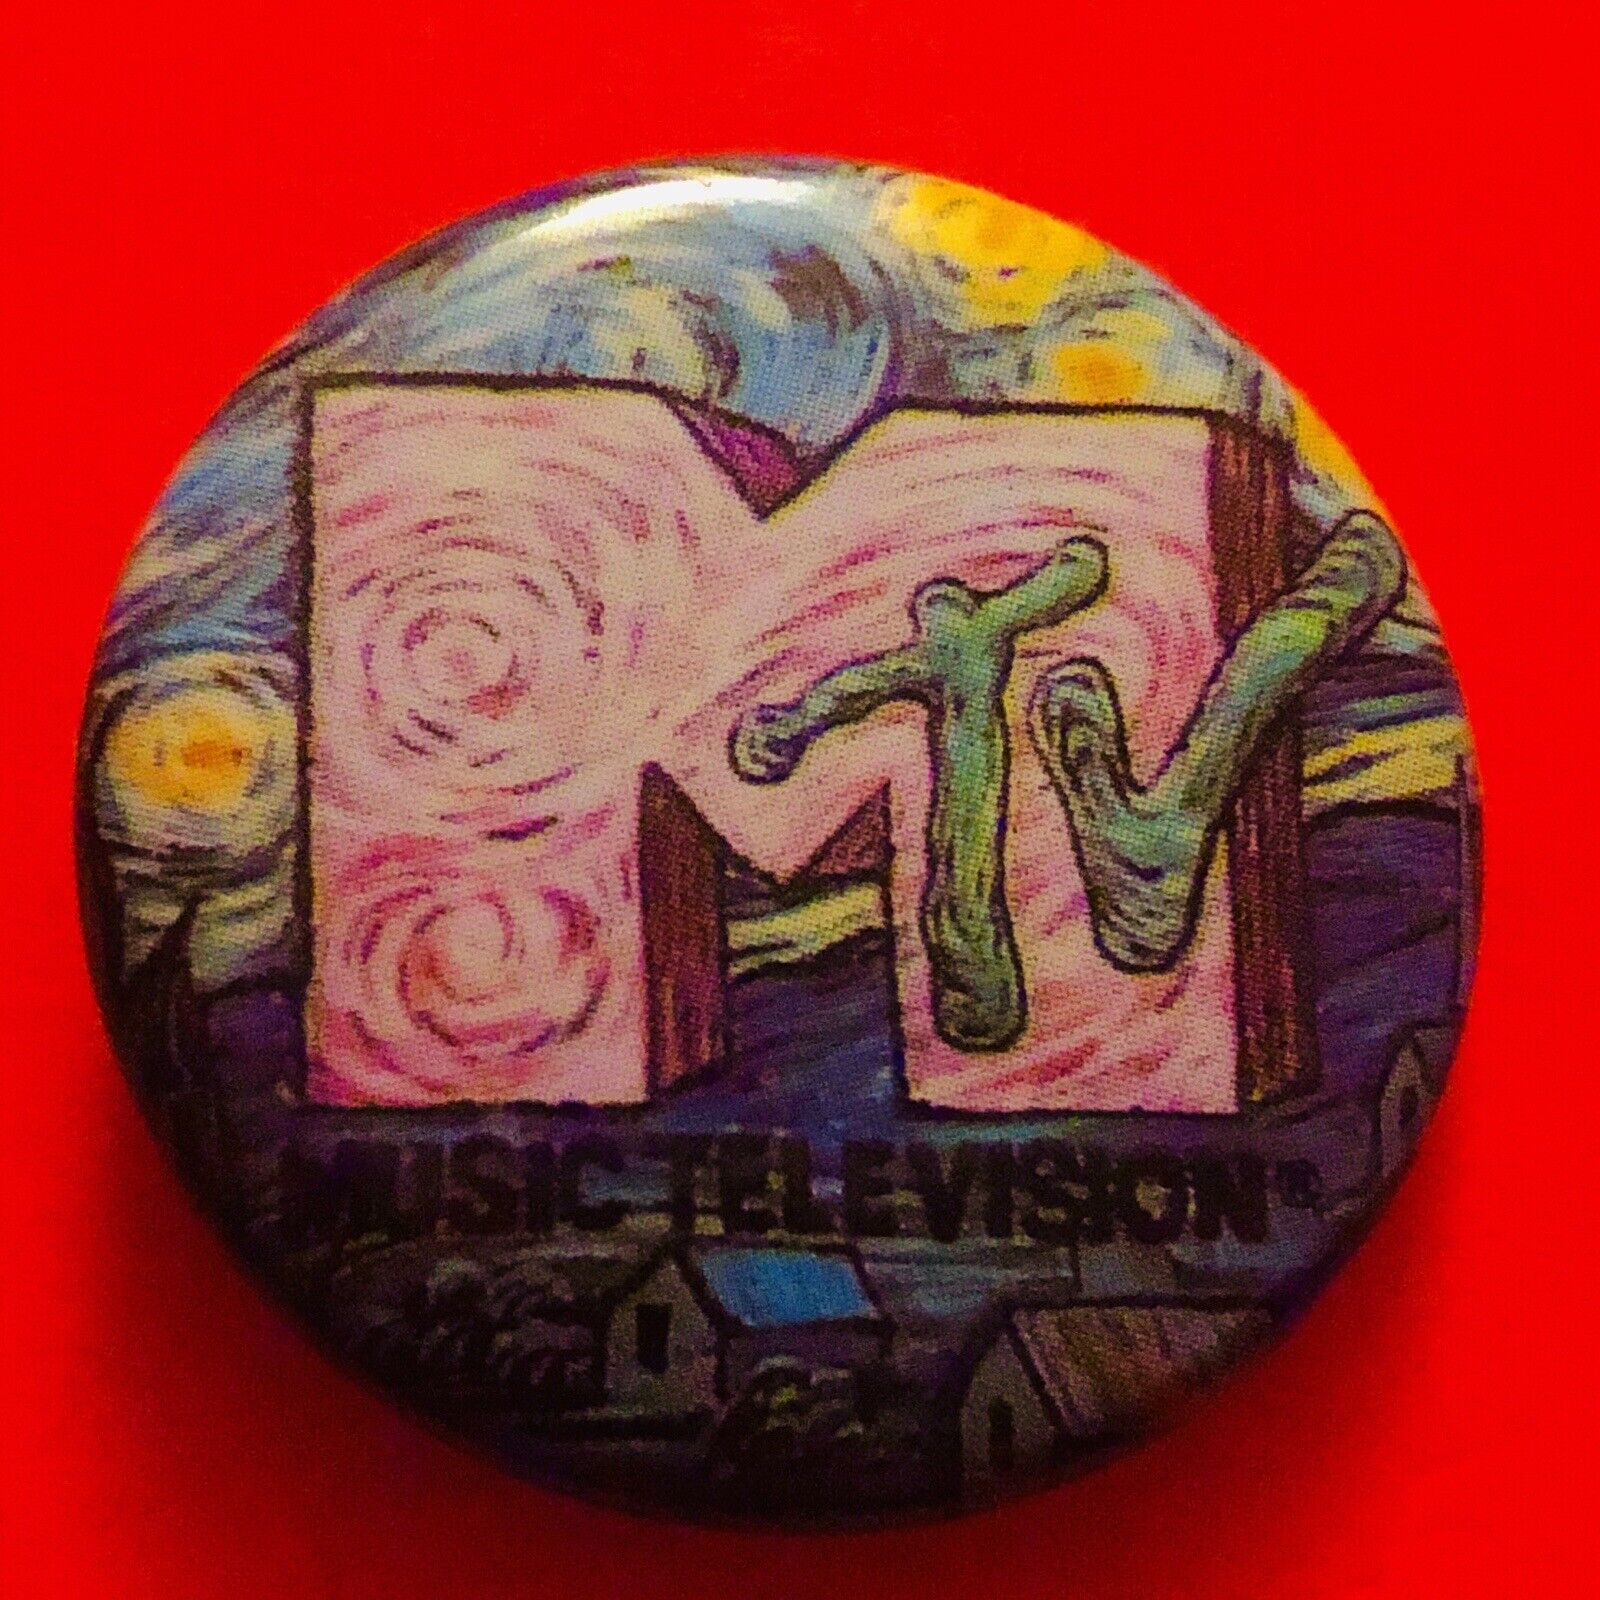 Vintage 1980s Original 80s MTV Metal Pin Pinback BUTTON Van Gogh Art Design VTG